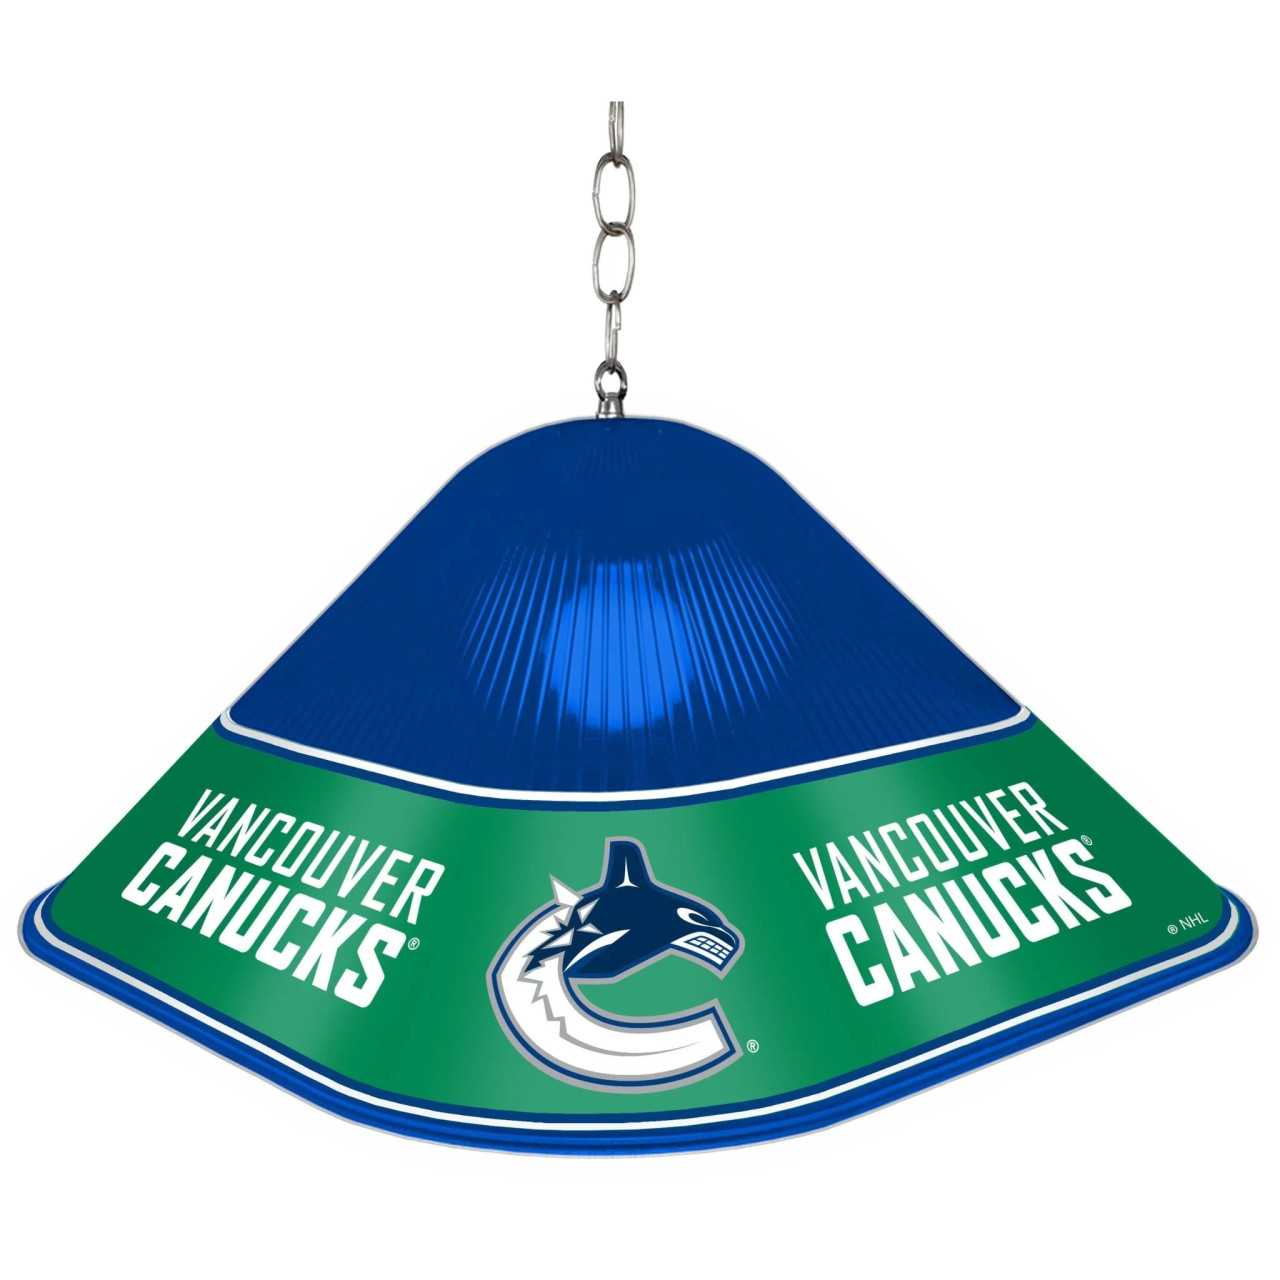 Vancouver, Van, Canucks, Game, Table, Light, Lamp, NHVANC-410-01, The Fan-Brand, NHL, 686878994261